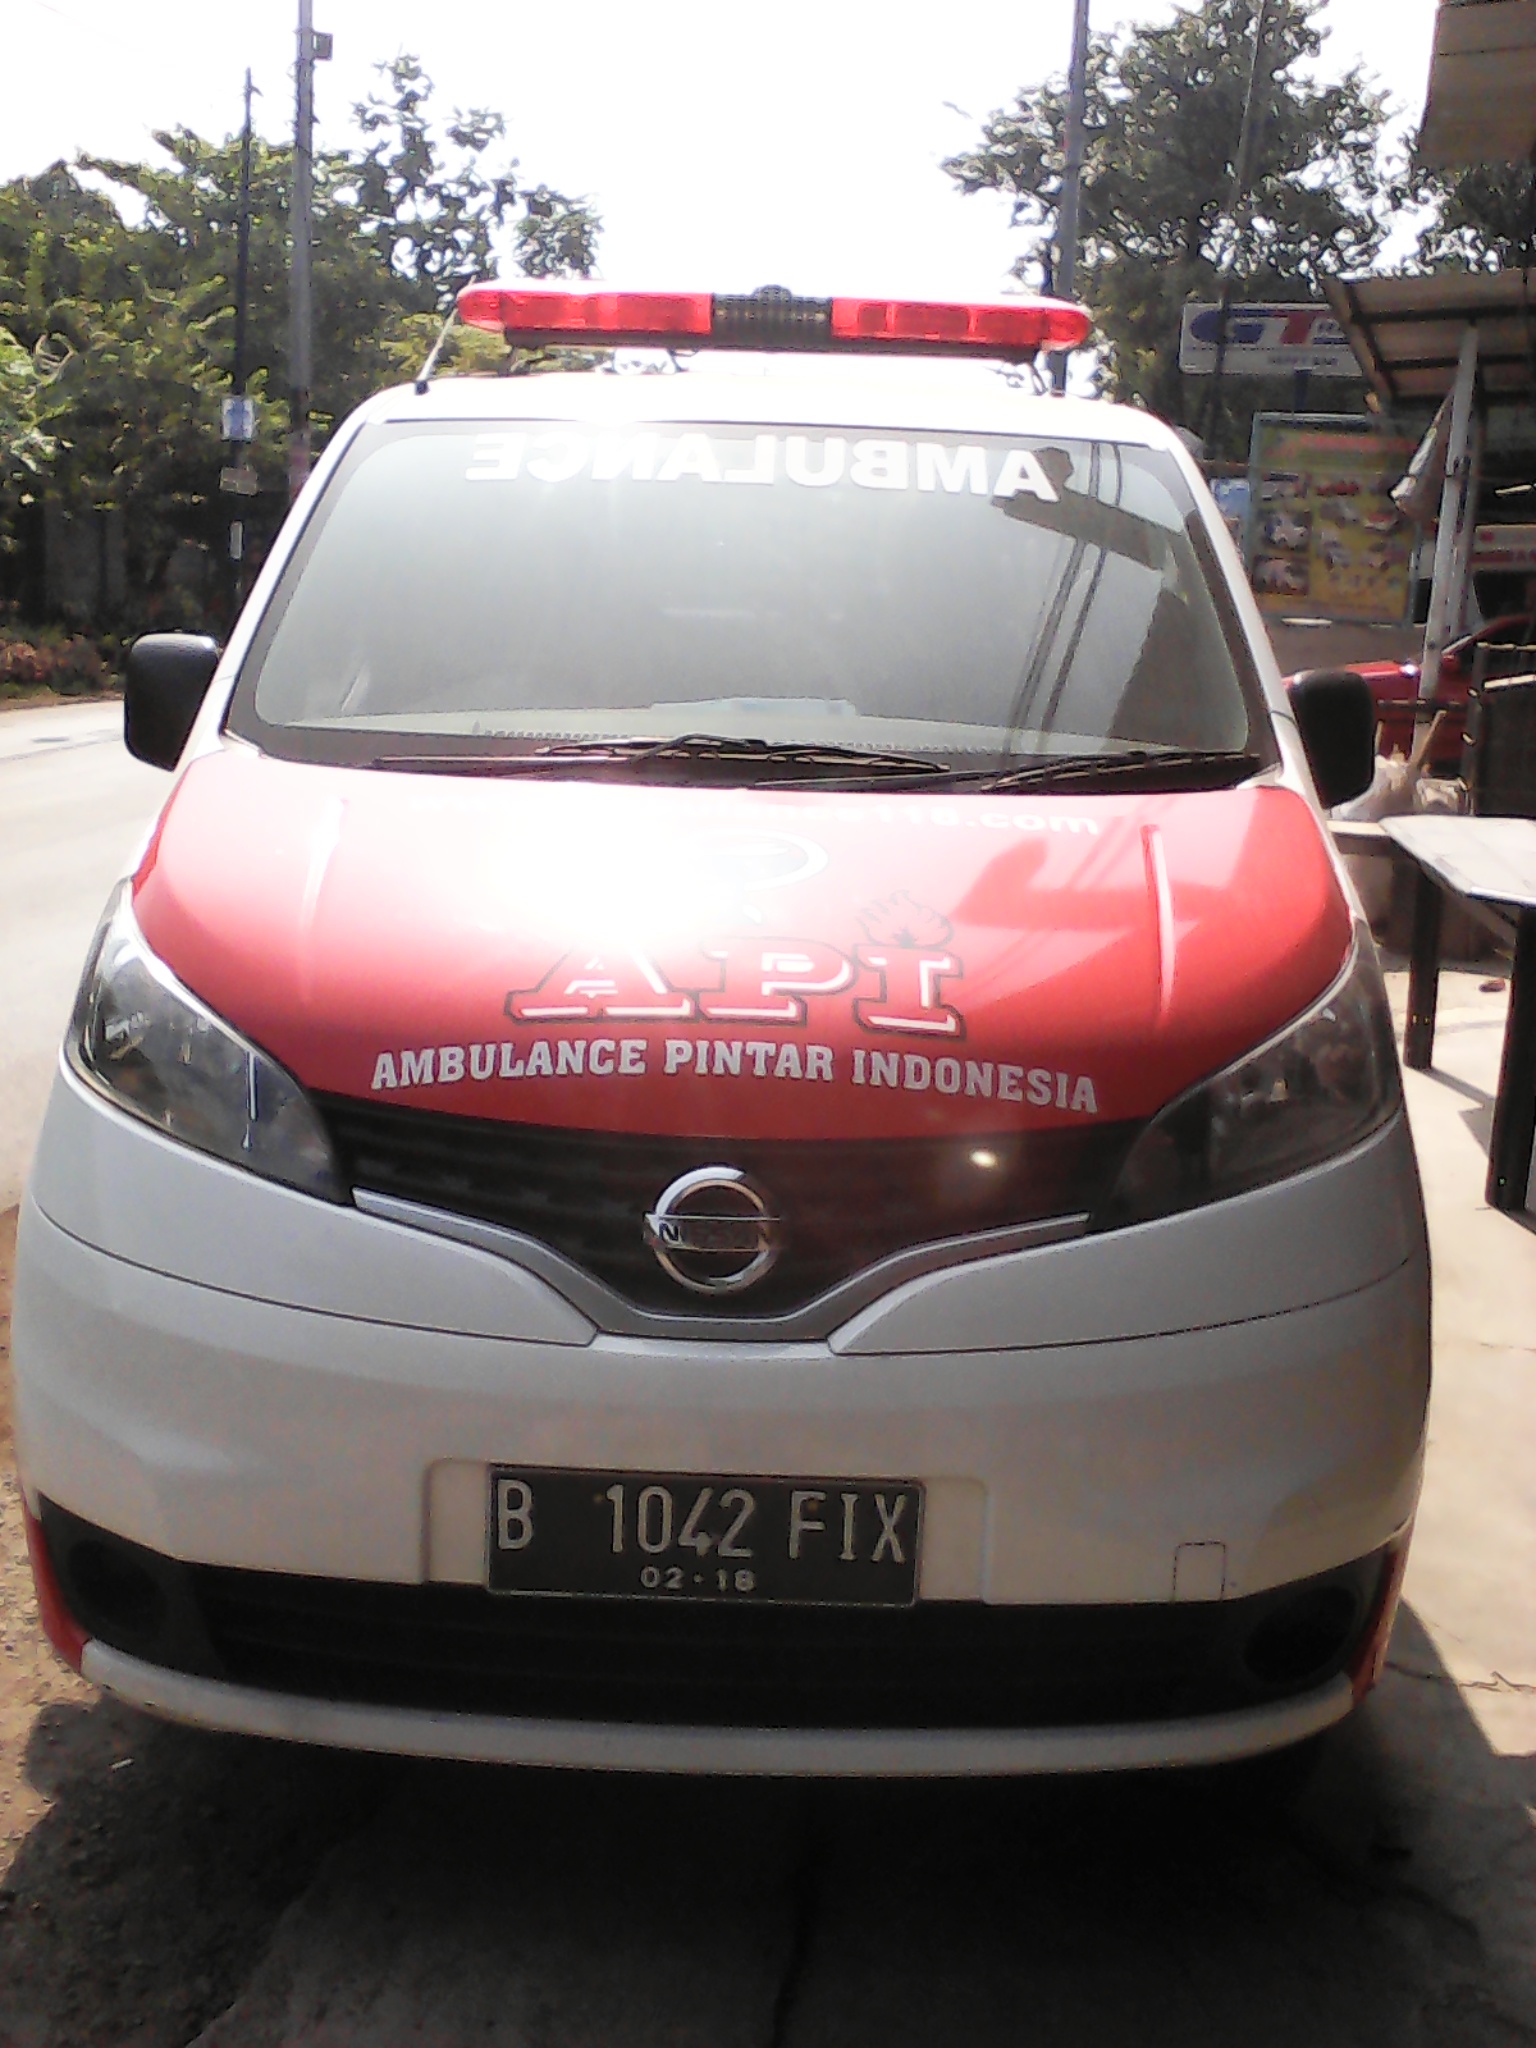 Jual Ambulance Second Nissan Evalia Ambulance Center 081212173882